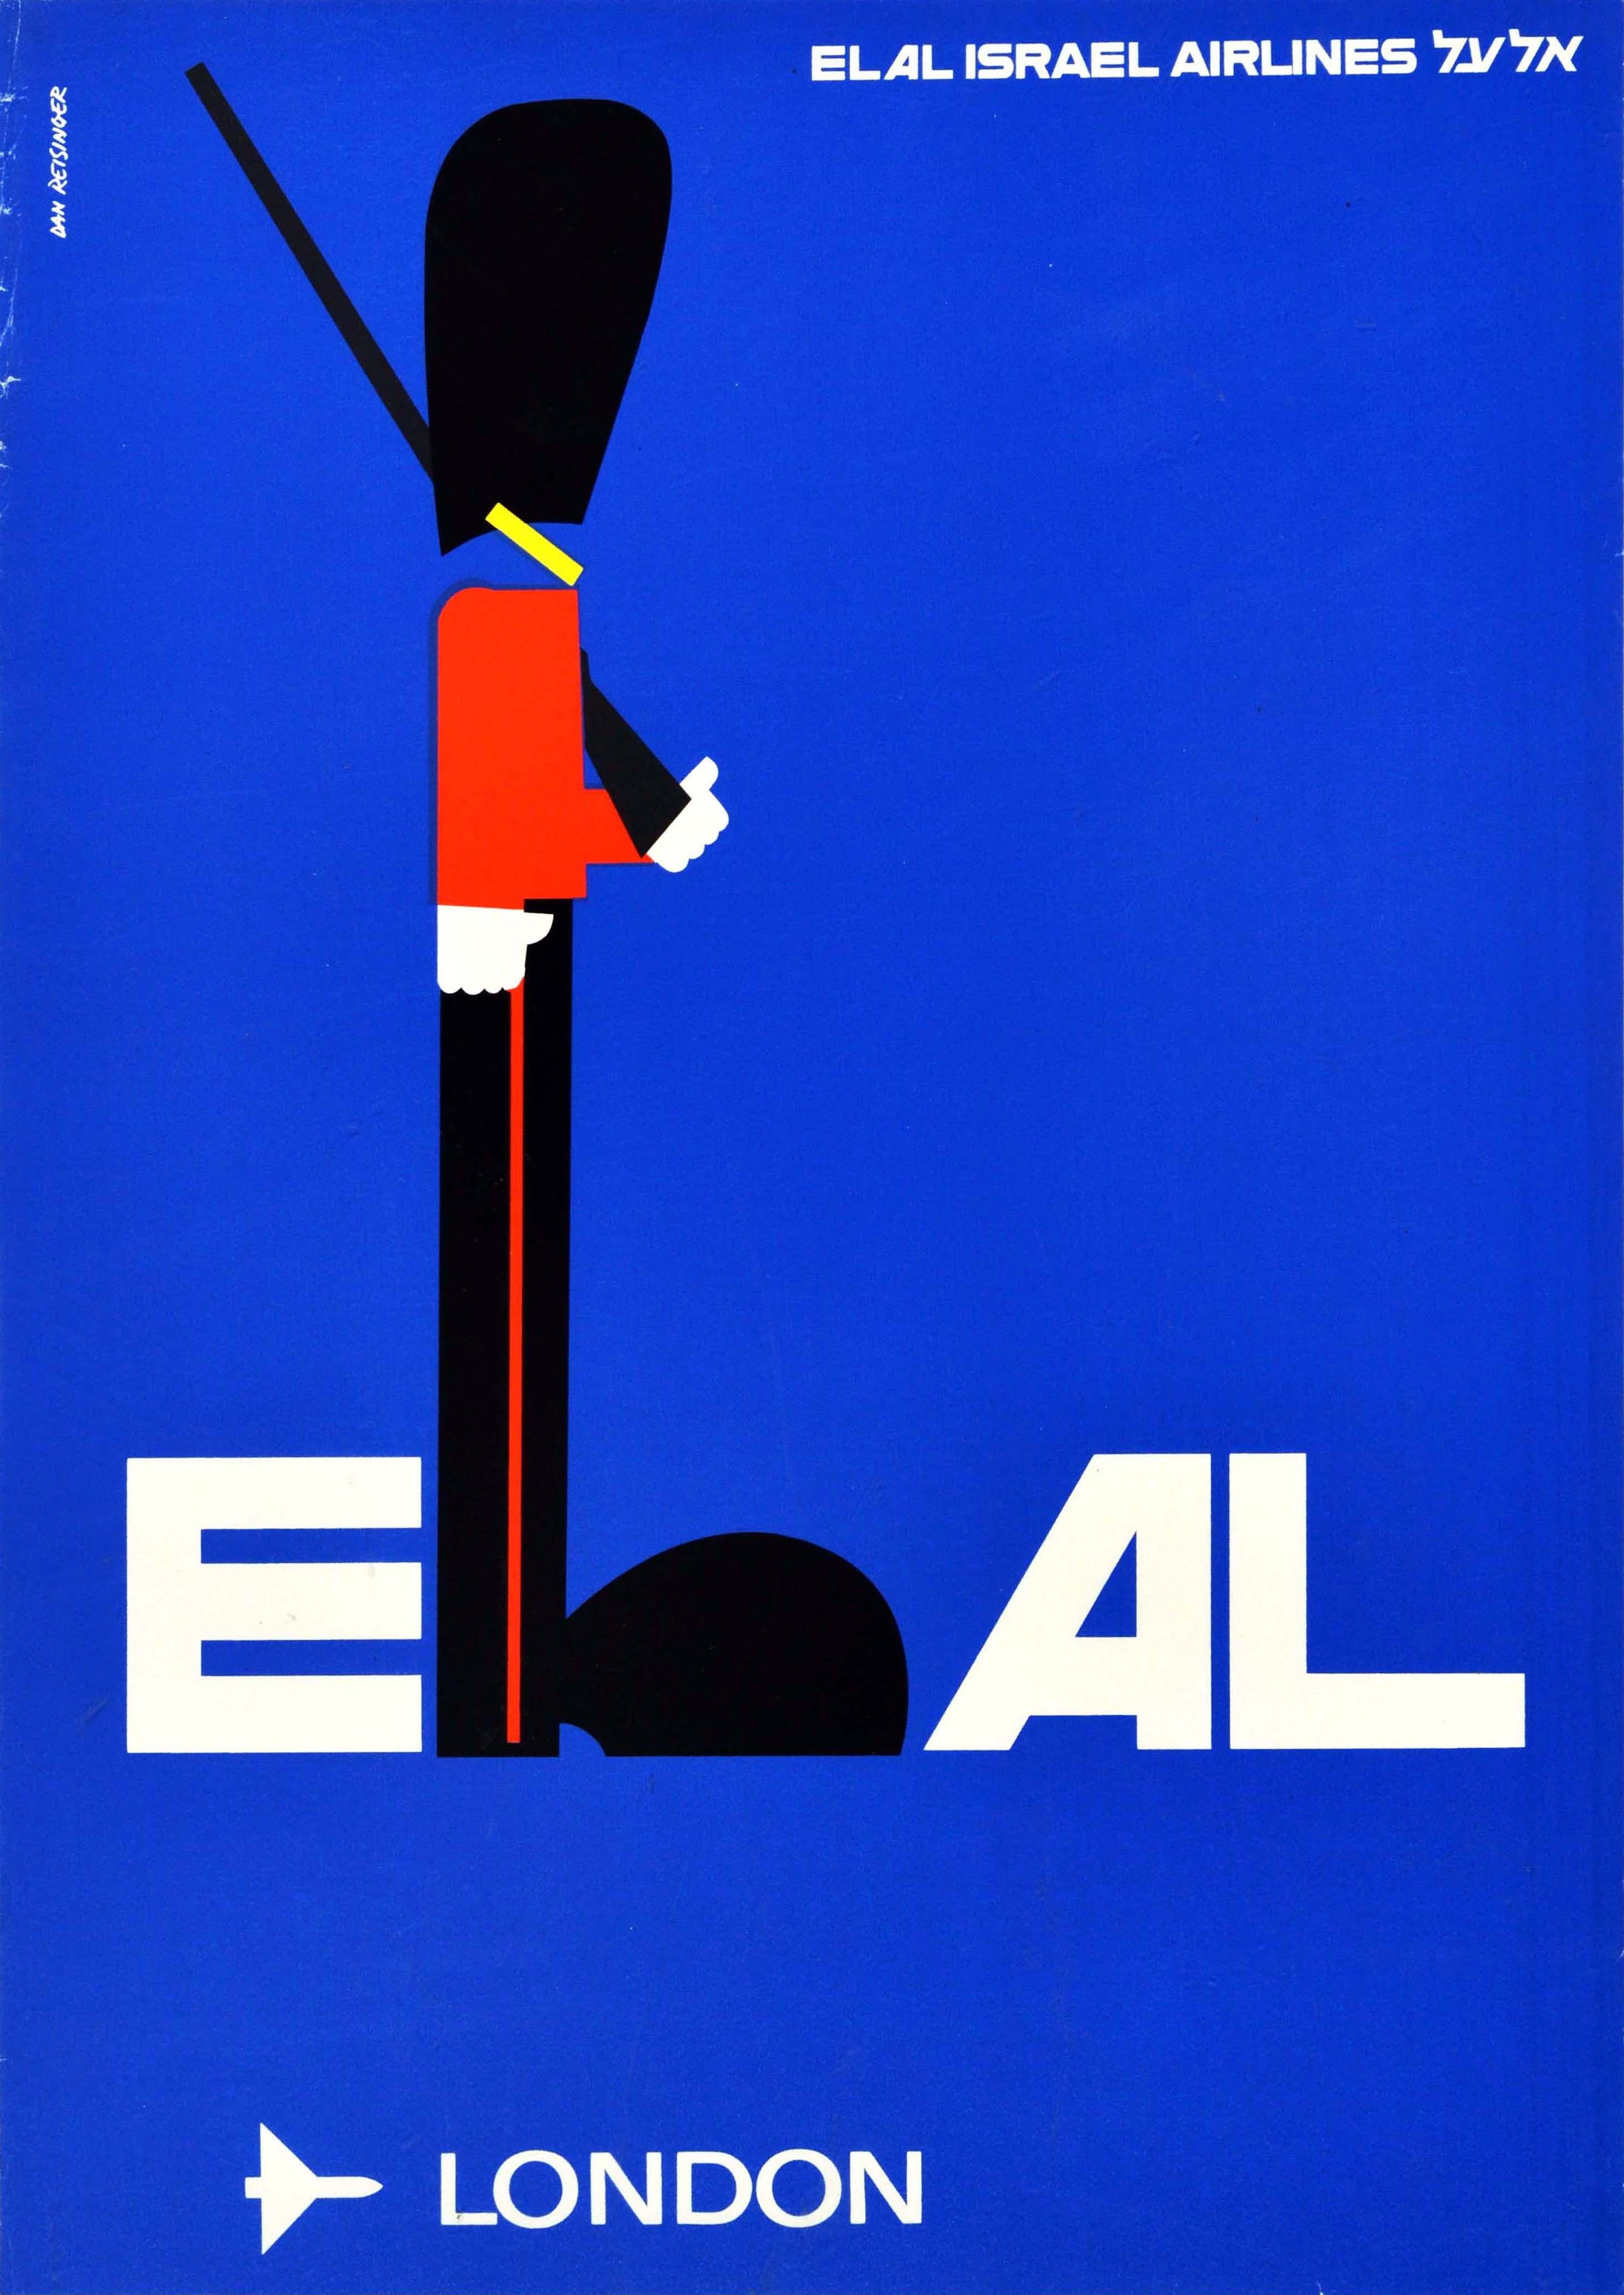 Dan Reisinger Print - Original Vintage Travel Poster El Al Israel Airlines London England Royal Guard